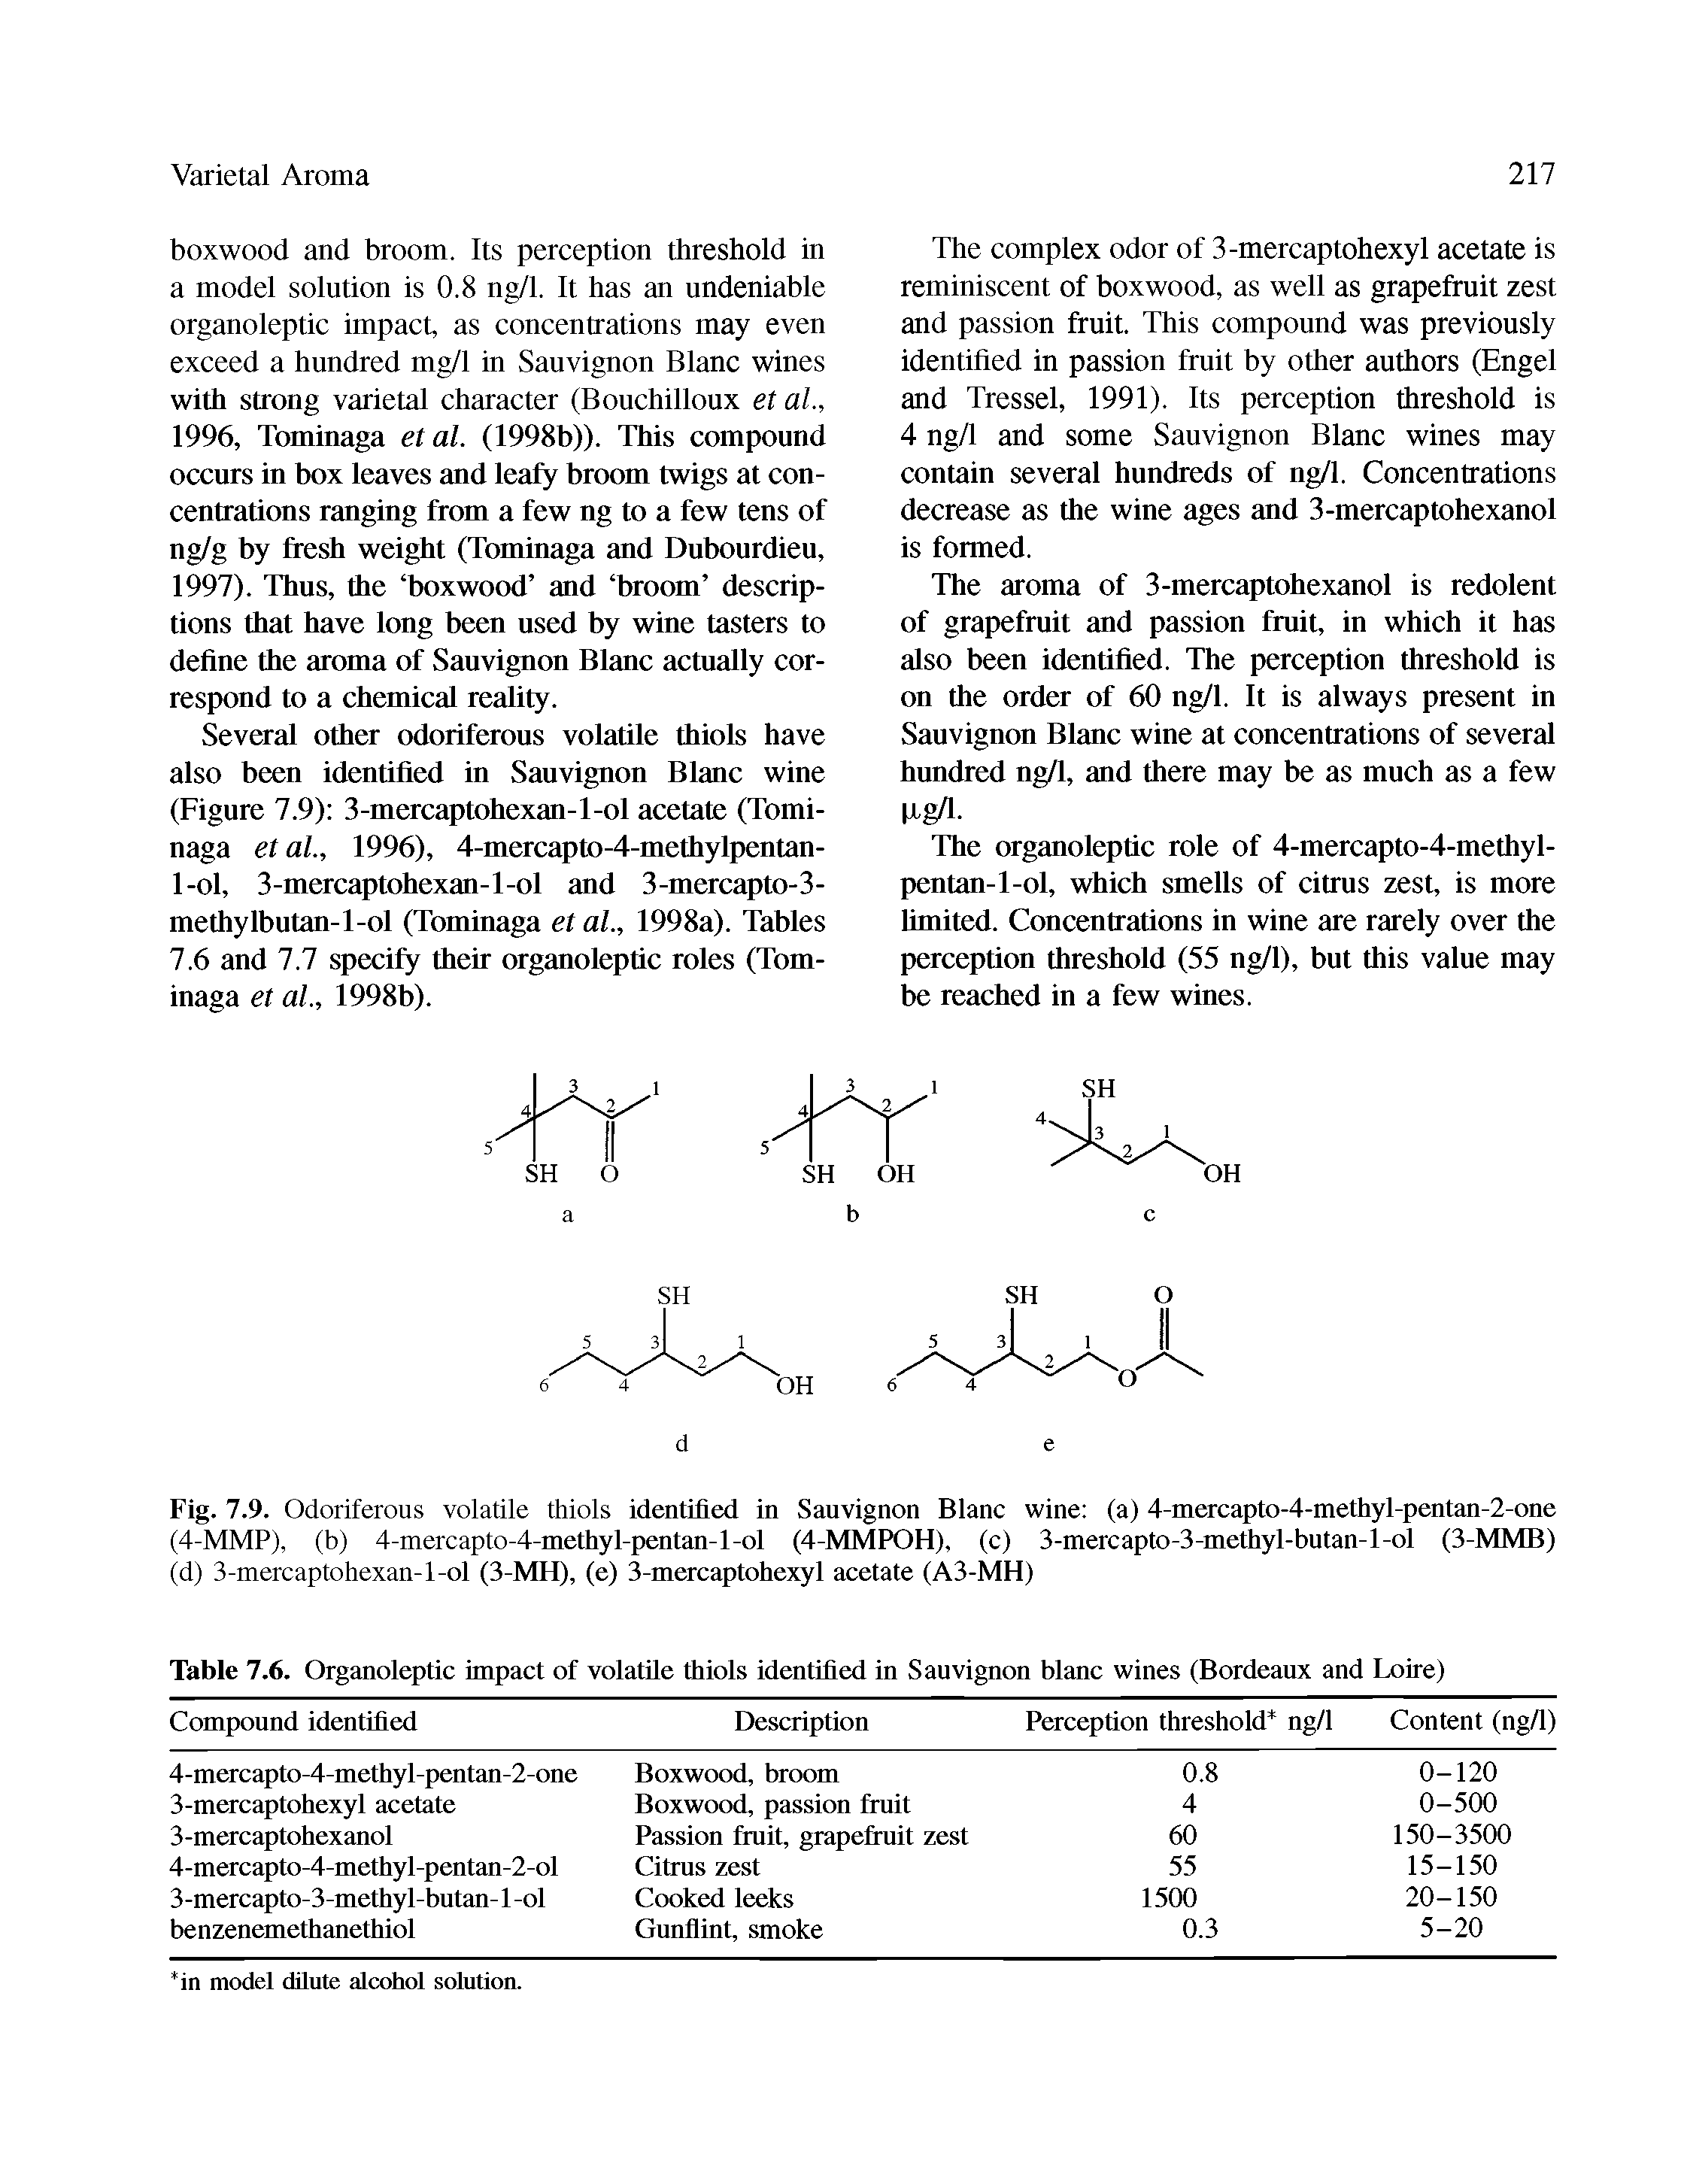 Fig. 7.9. Odoriferous volatile thiols identified in Sanvignon Blanc wine (a) 4-mercapto-4-methyl-pentan-2-one (4-MMP), (b) 4-mercapto-4-methyl-pentan-l-ol (4-MMPOH), (c) 3-mercapto-3-methyl-butan-l-ol (3-MMB) (d) 3-mercaptohexan-l-ol (3-MH), (e) 3-mercaptohexyl acetate (A3-MH)...